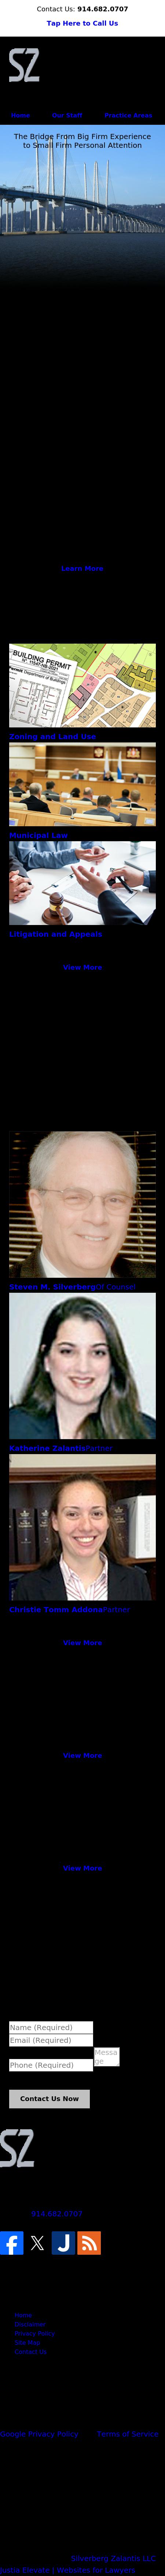 Silverberg Zalantis LLP - Tarrytown NY Lawyers